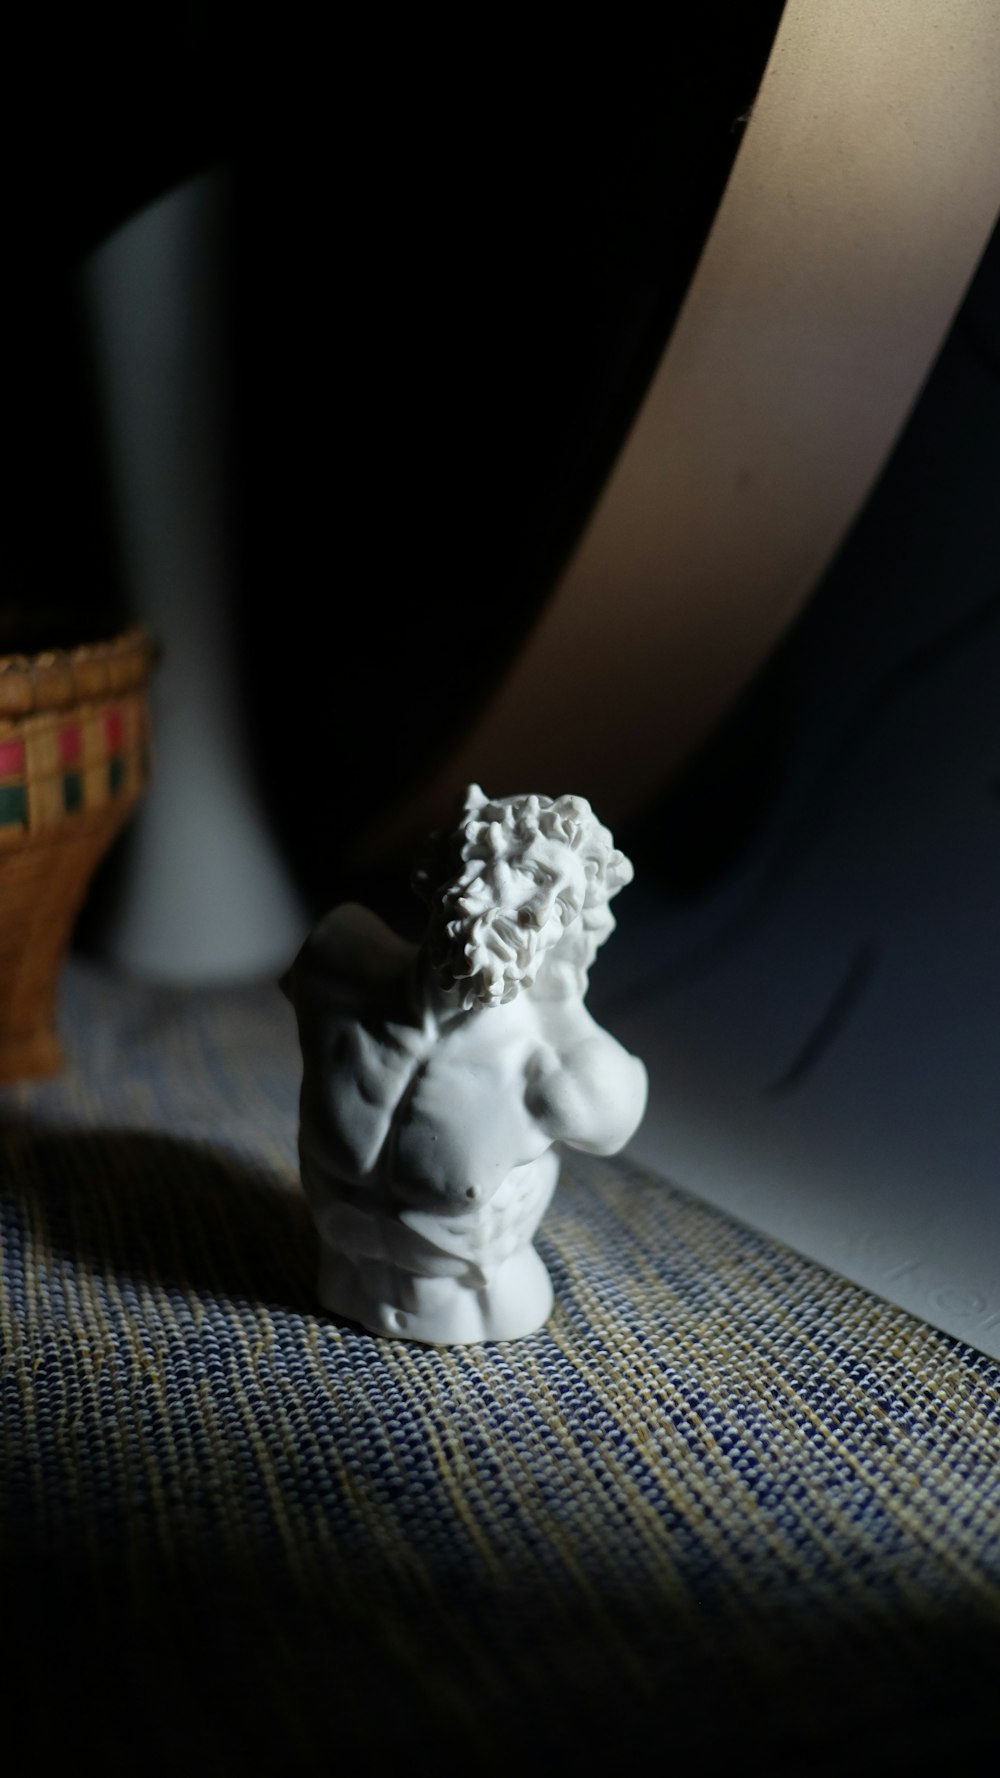 white ceramic figurine on white and blue textile